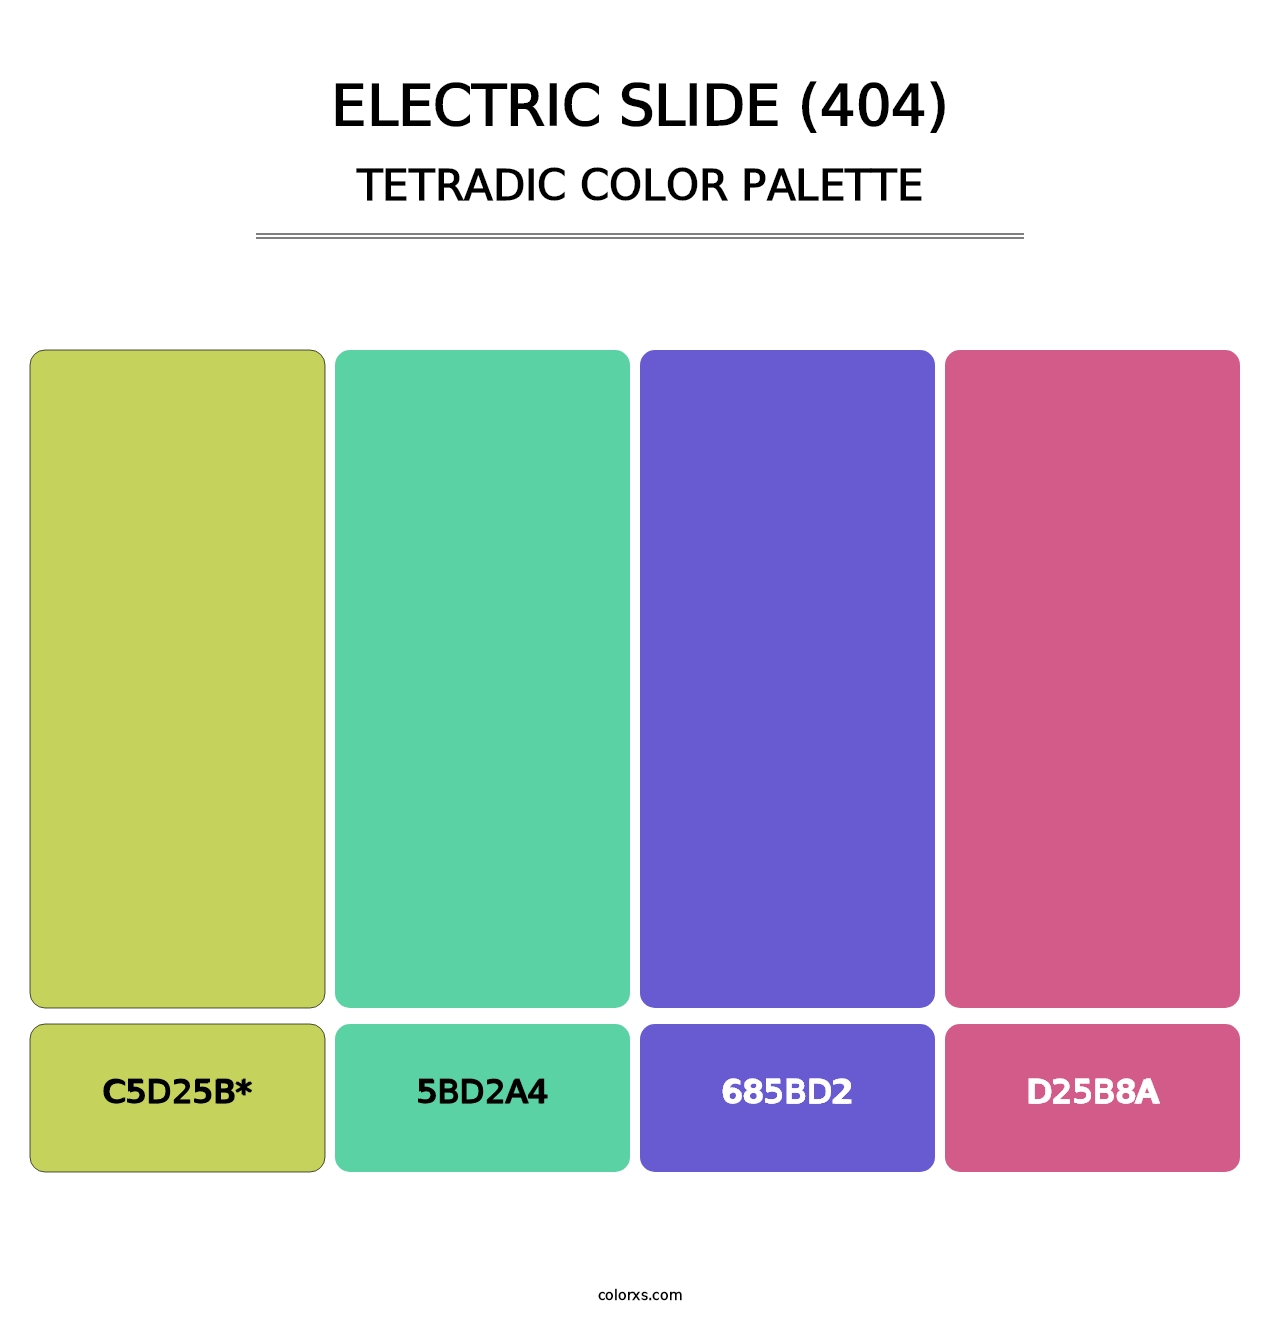 Electric Slide (404) - Tetradic Color Palette